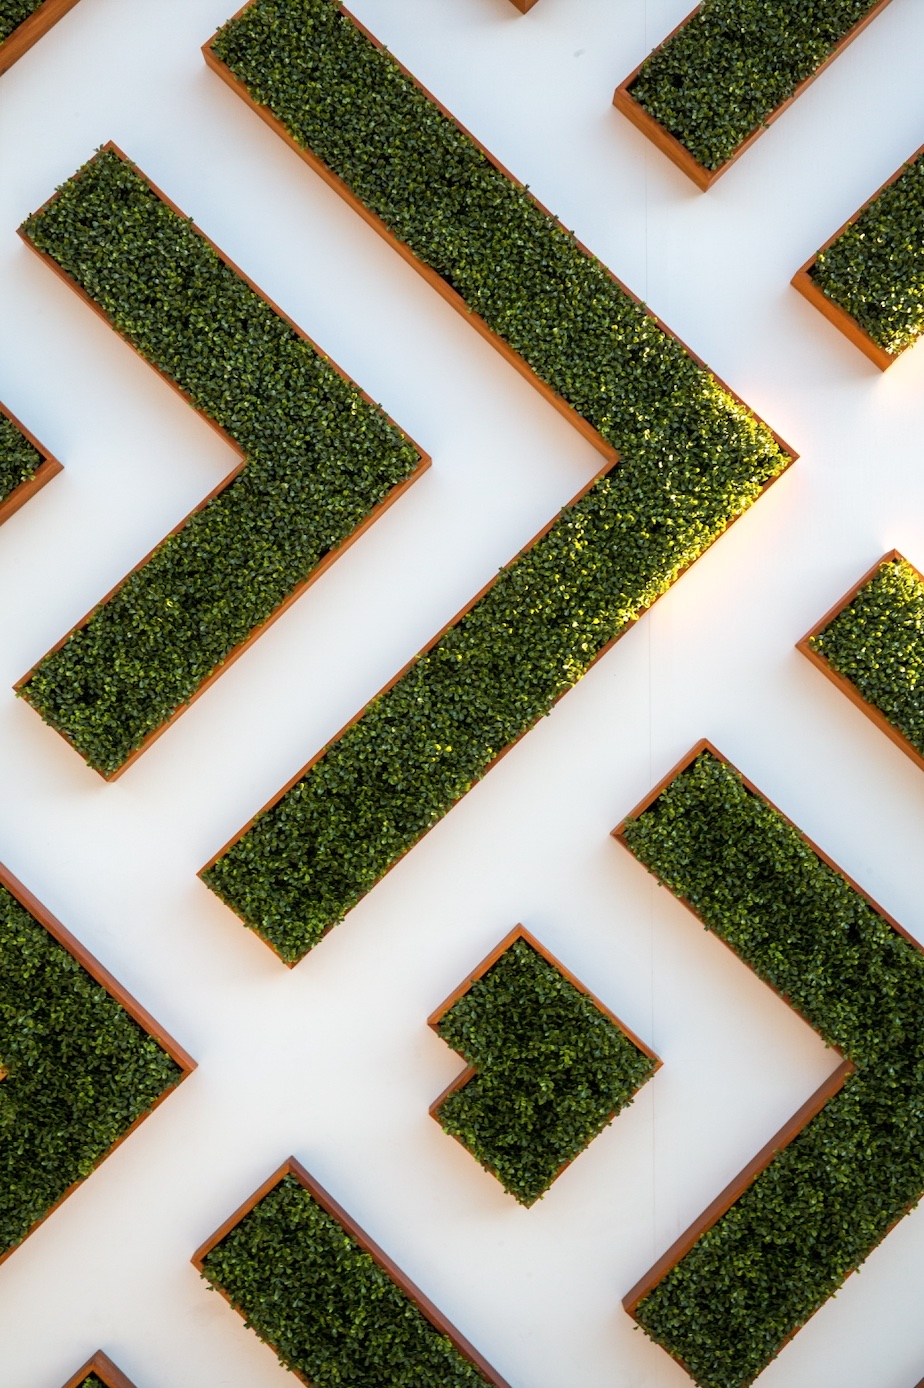 Geometric hanging planters with greens; image by Jason Leung, via Unsplash.com.